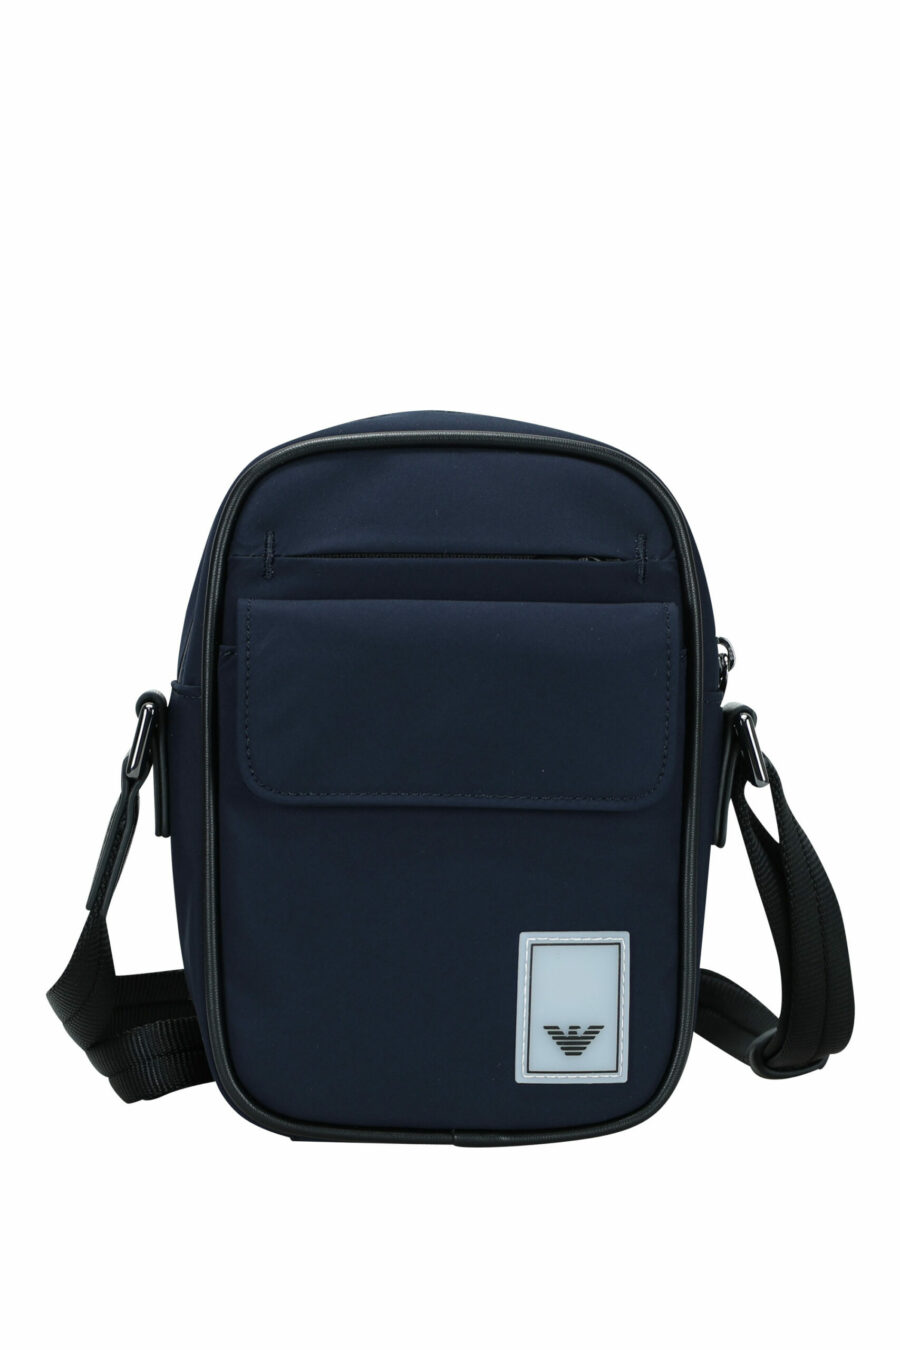 Dark blue shoulder bag with mini logo eagle tag - 8058997154802 scaled